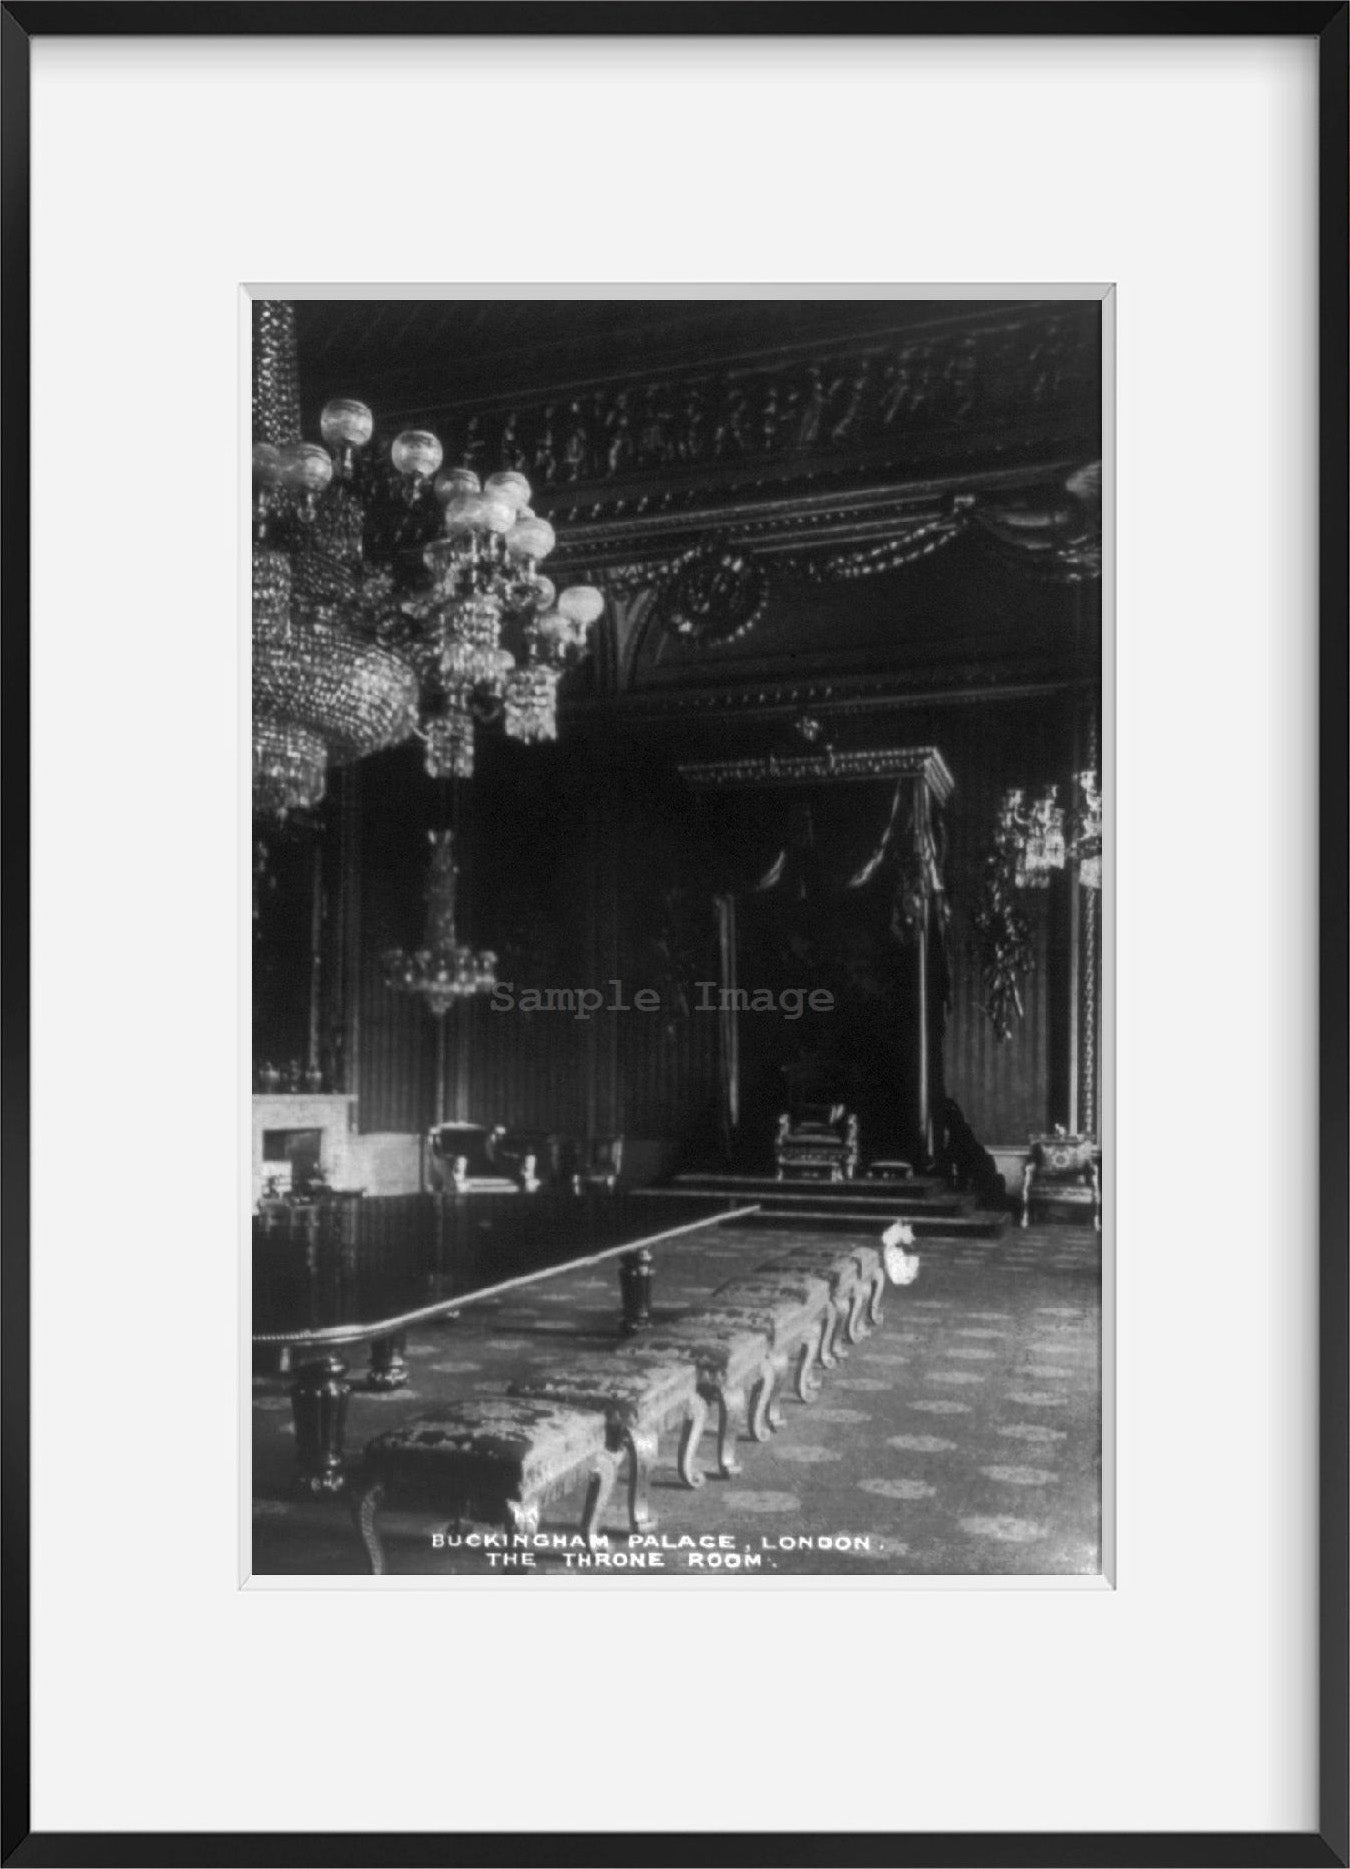 1901 Photo Buckingham Palace, London - The Throne Room